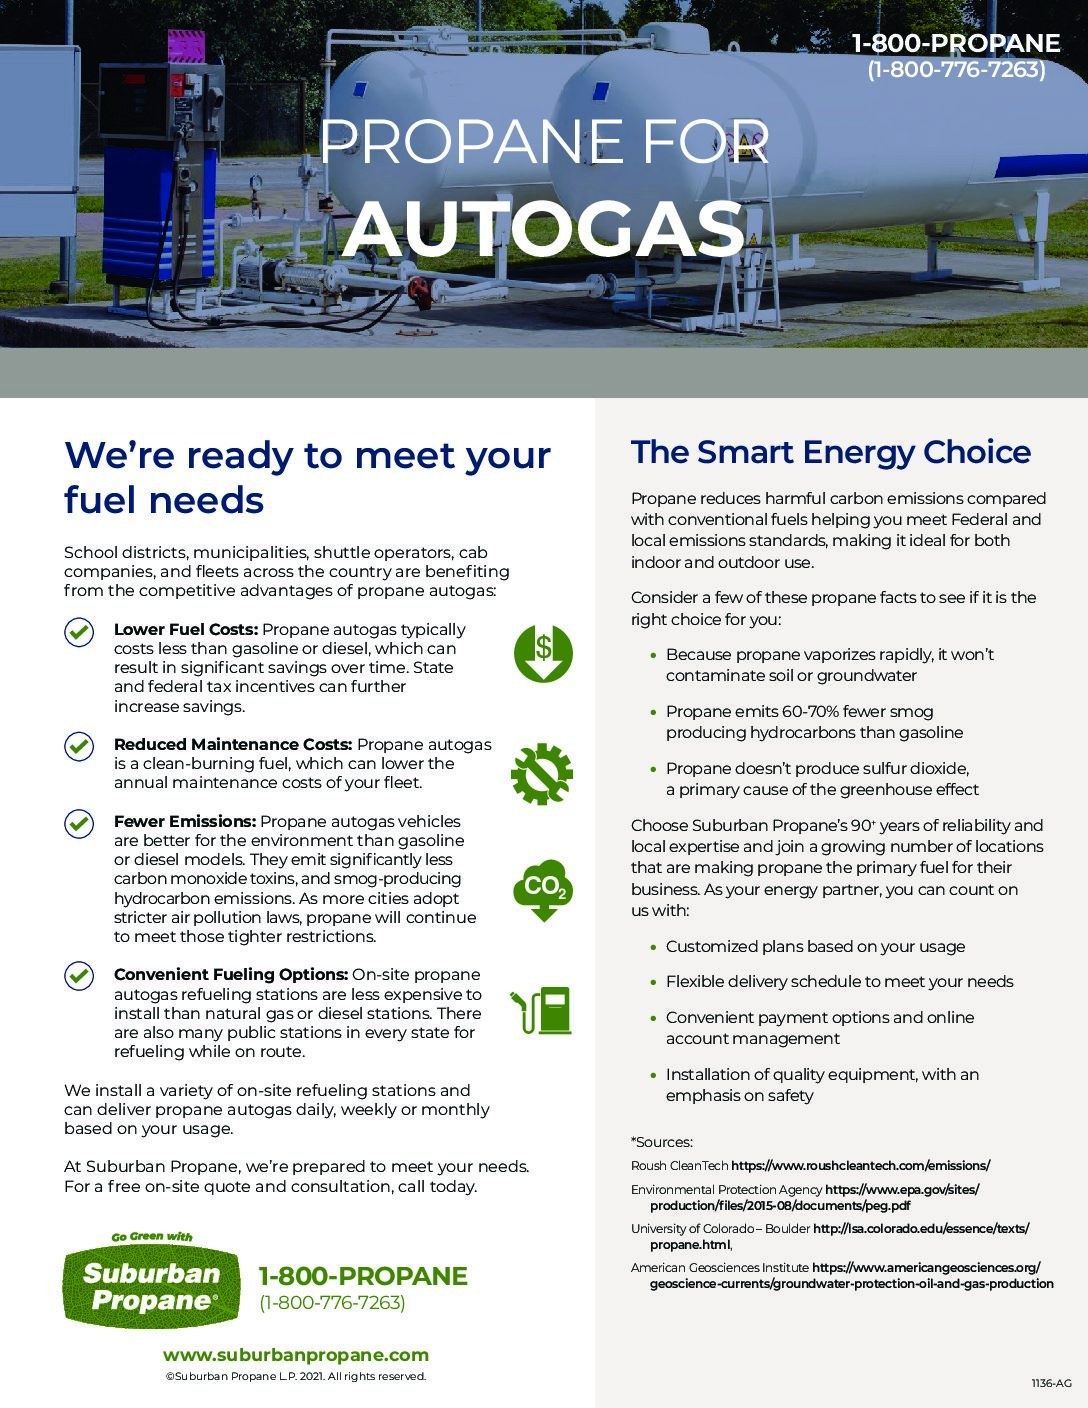 Propane for autogas PDF image